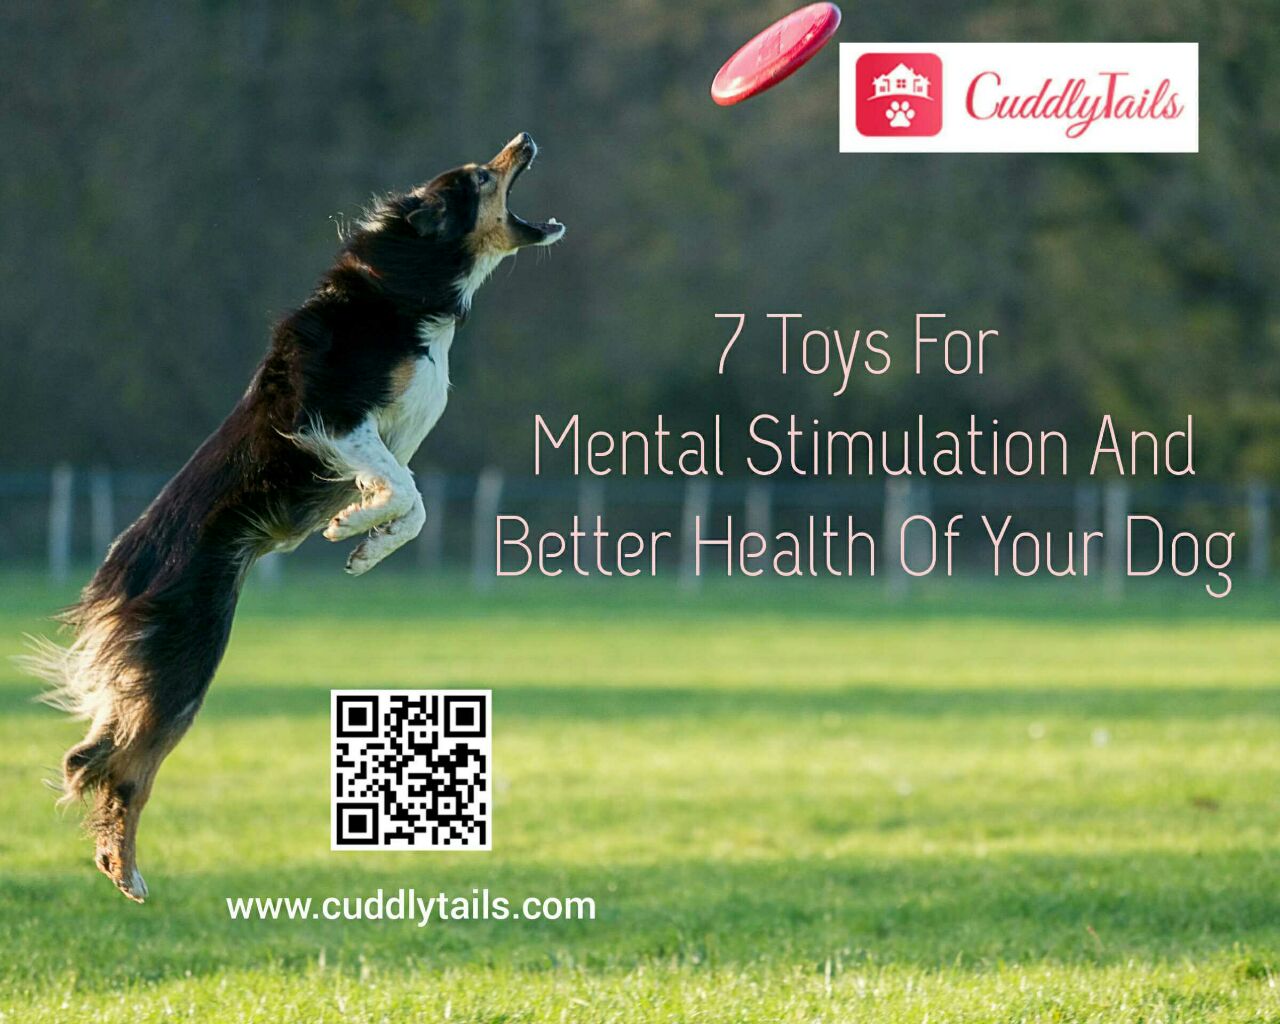 https://www.cuddlytails.com/img/7-Toys-For-Mental-Stimulation-Of-Your-Dog.jpg